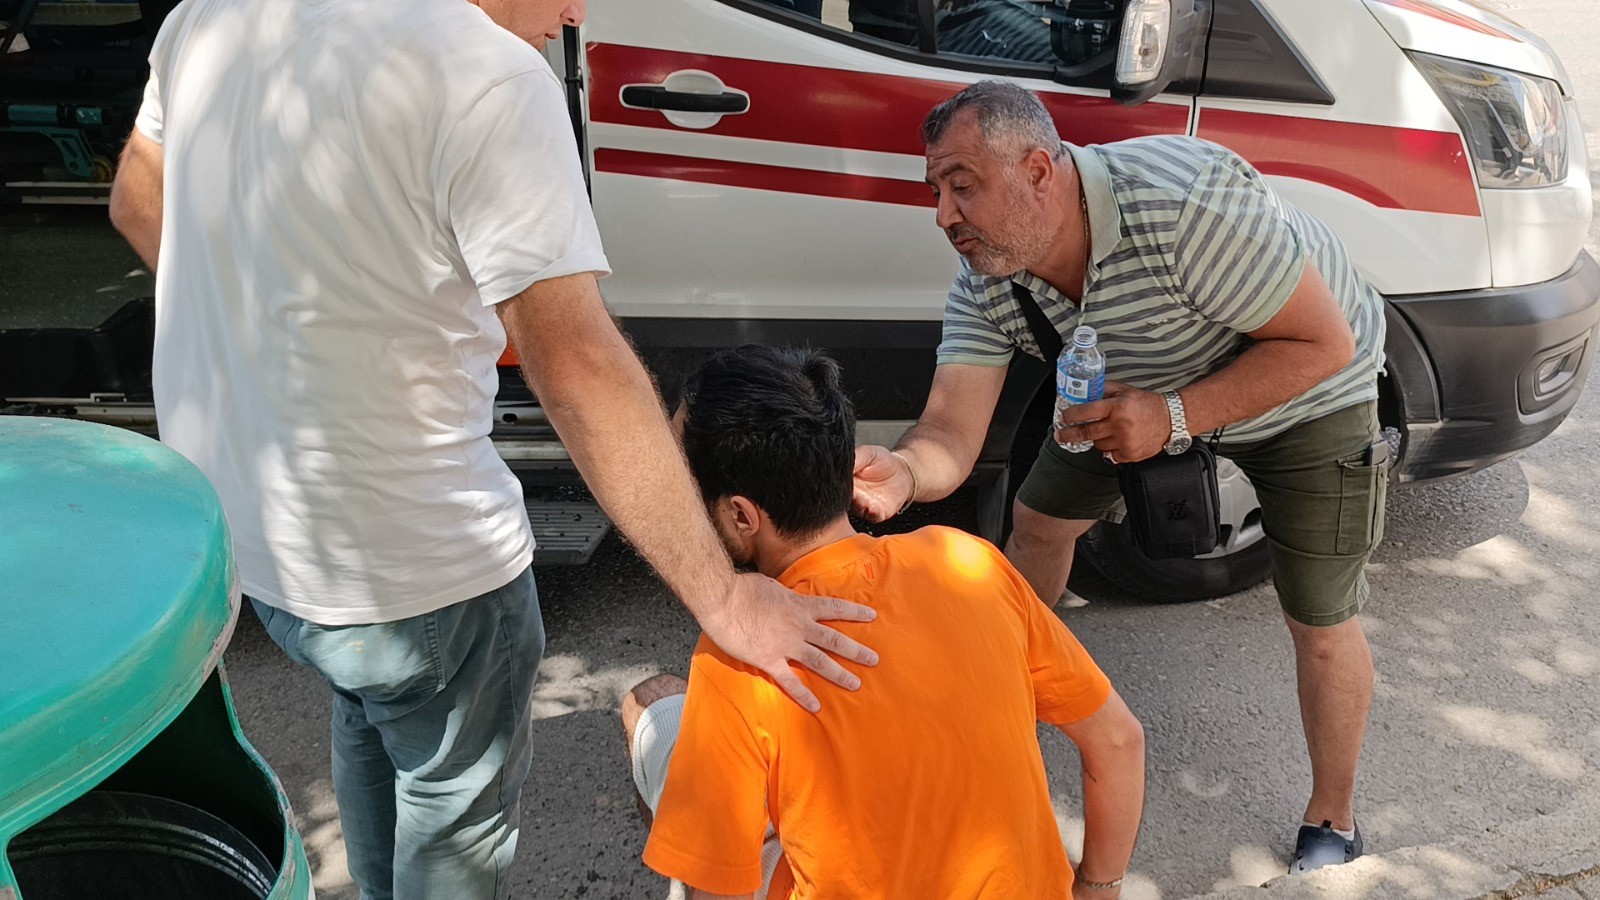 Antalyada Fikra Gibi Olay Kazaya Giden Ambulans Kaza Yapti (4)